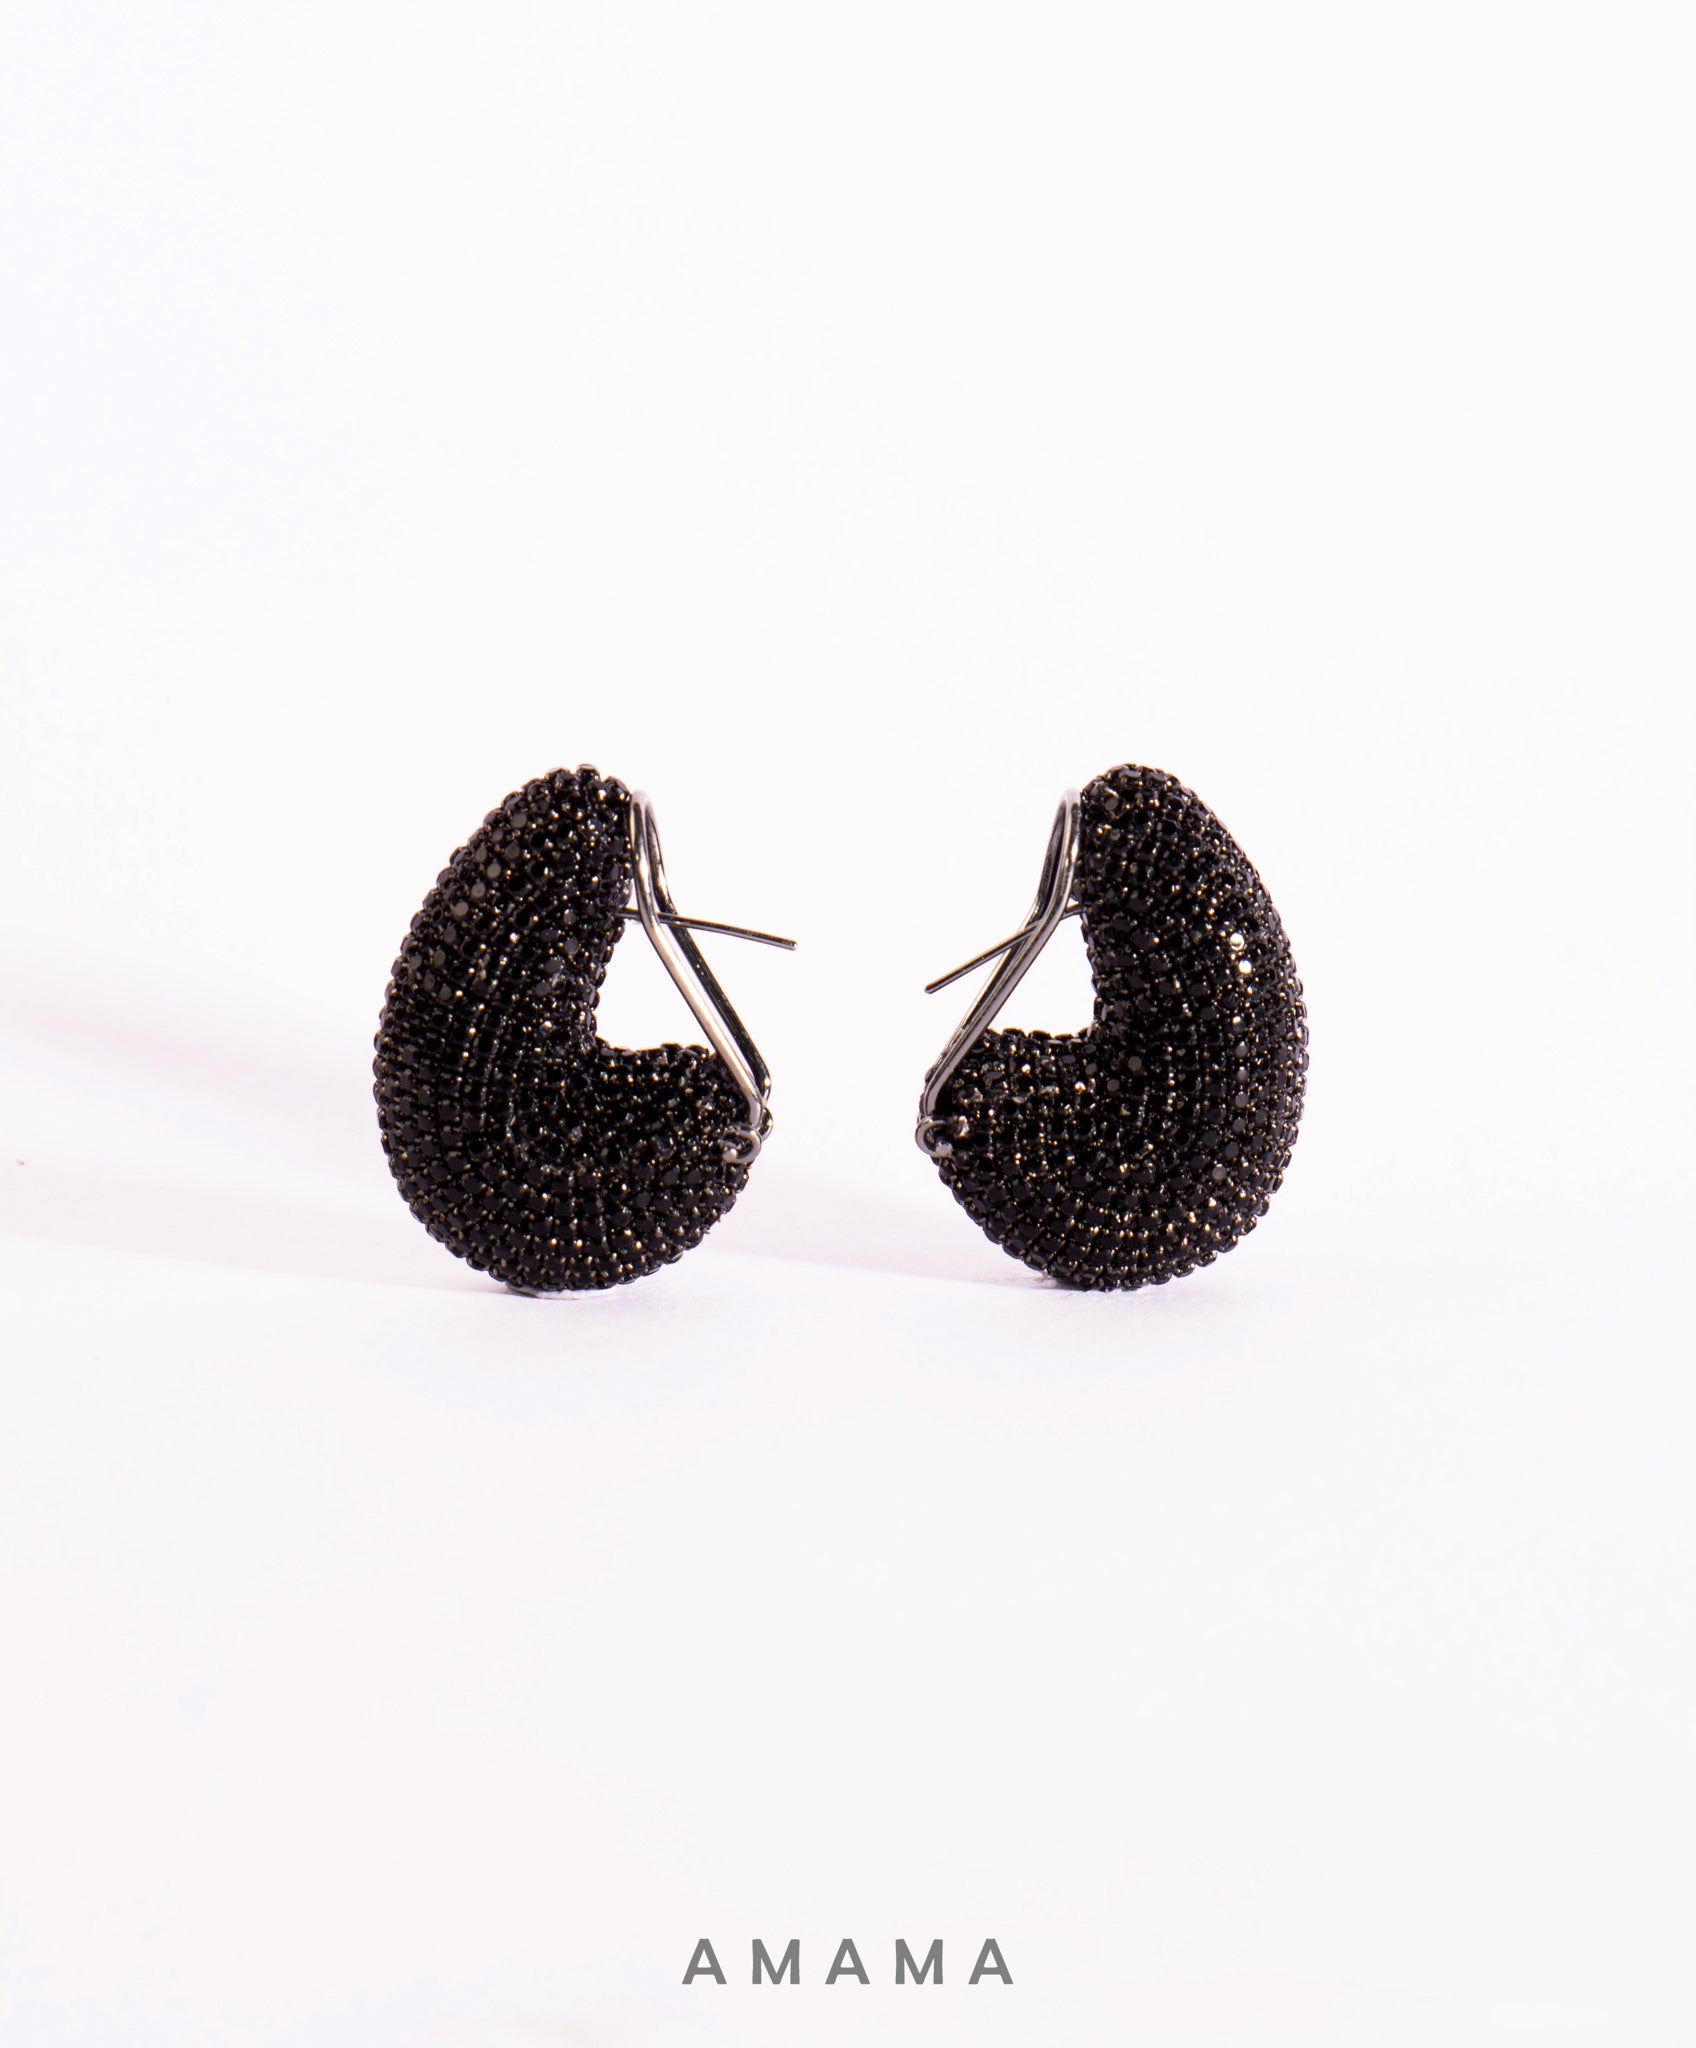 Amama,Kaju Earrings In Charcoal Black